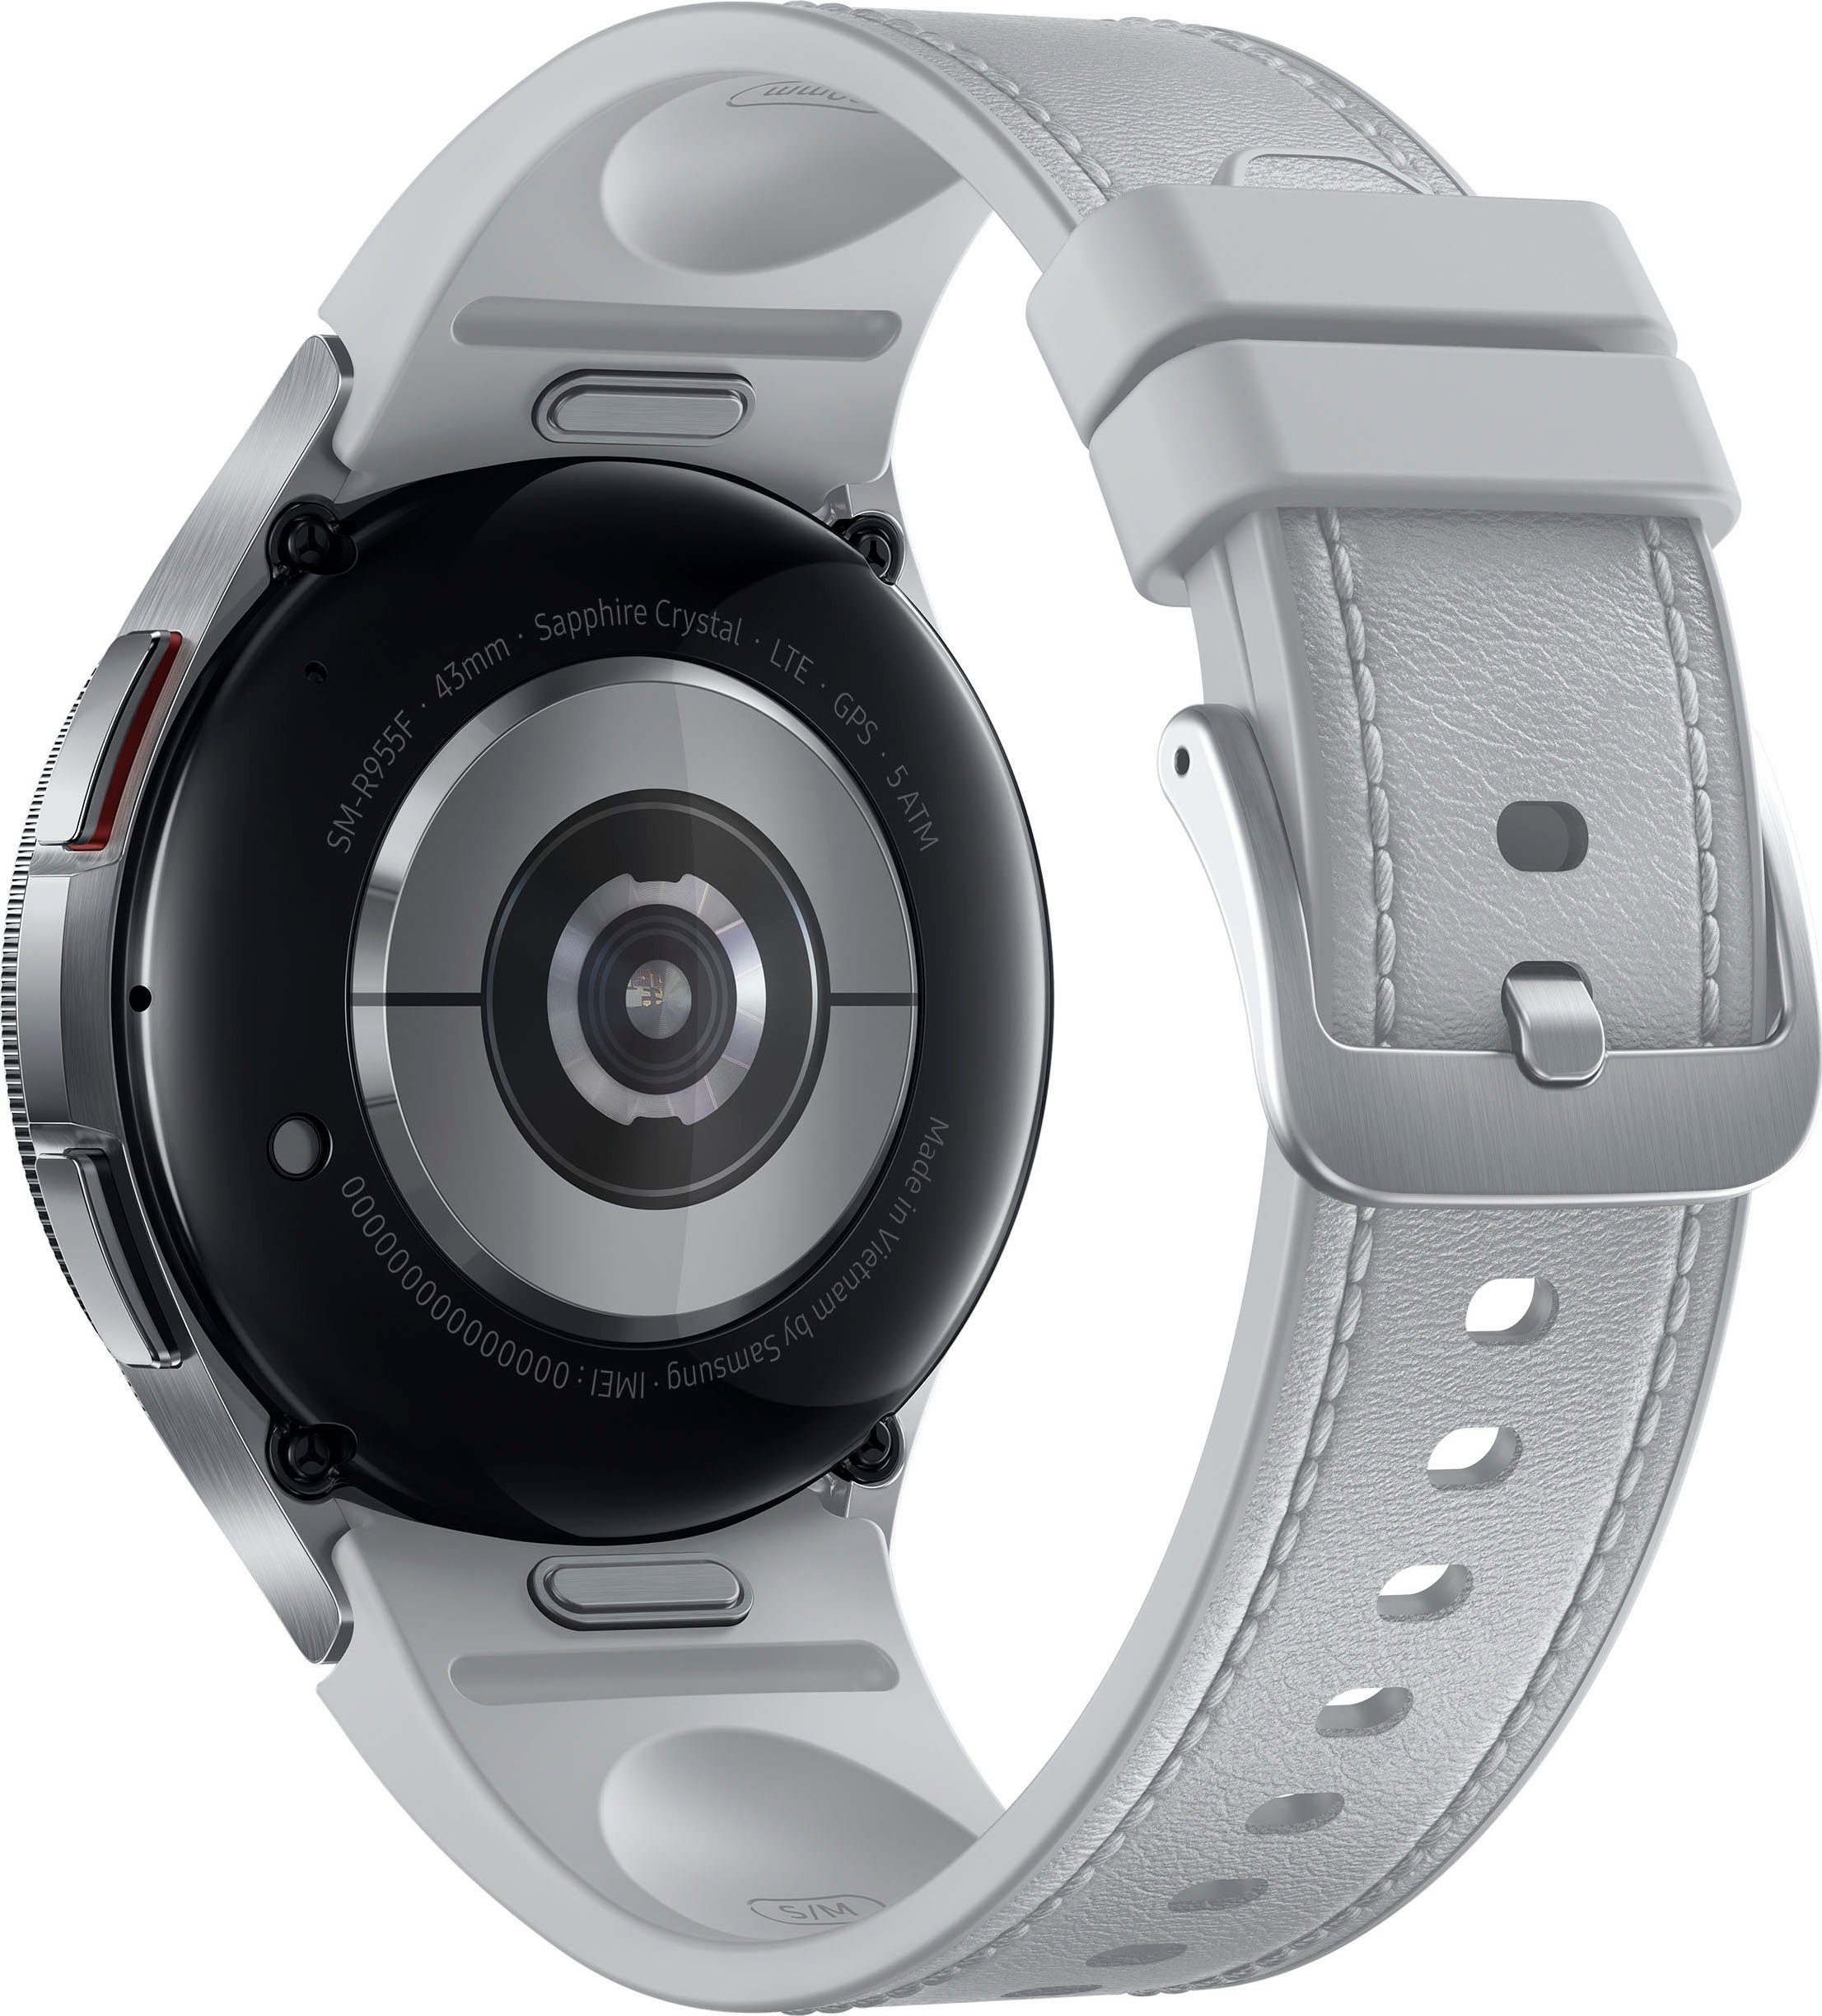 Samsung Galaxy by silber 6 | Smartwatch 43mm OS Wear LTE silber Classic cm/1,3 Zoll, Samsung) (3,33 Watch